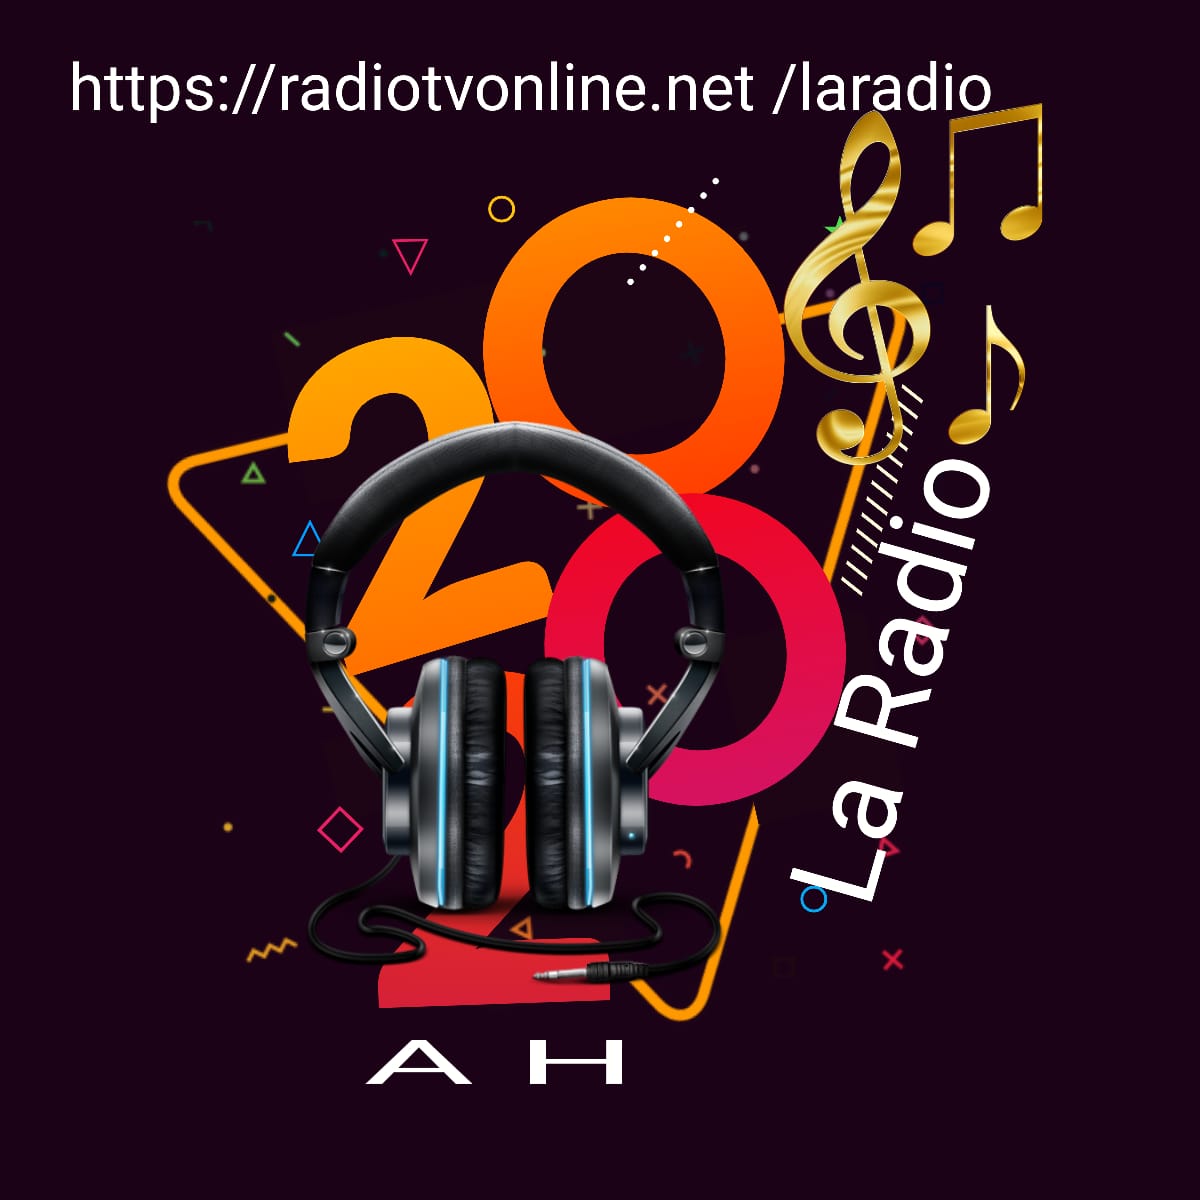 La Radio - Emisora Online